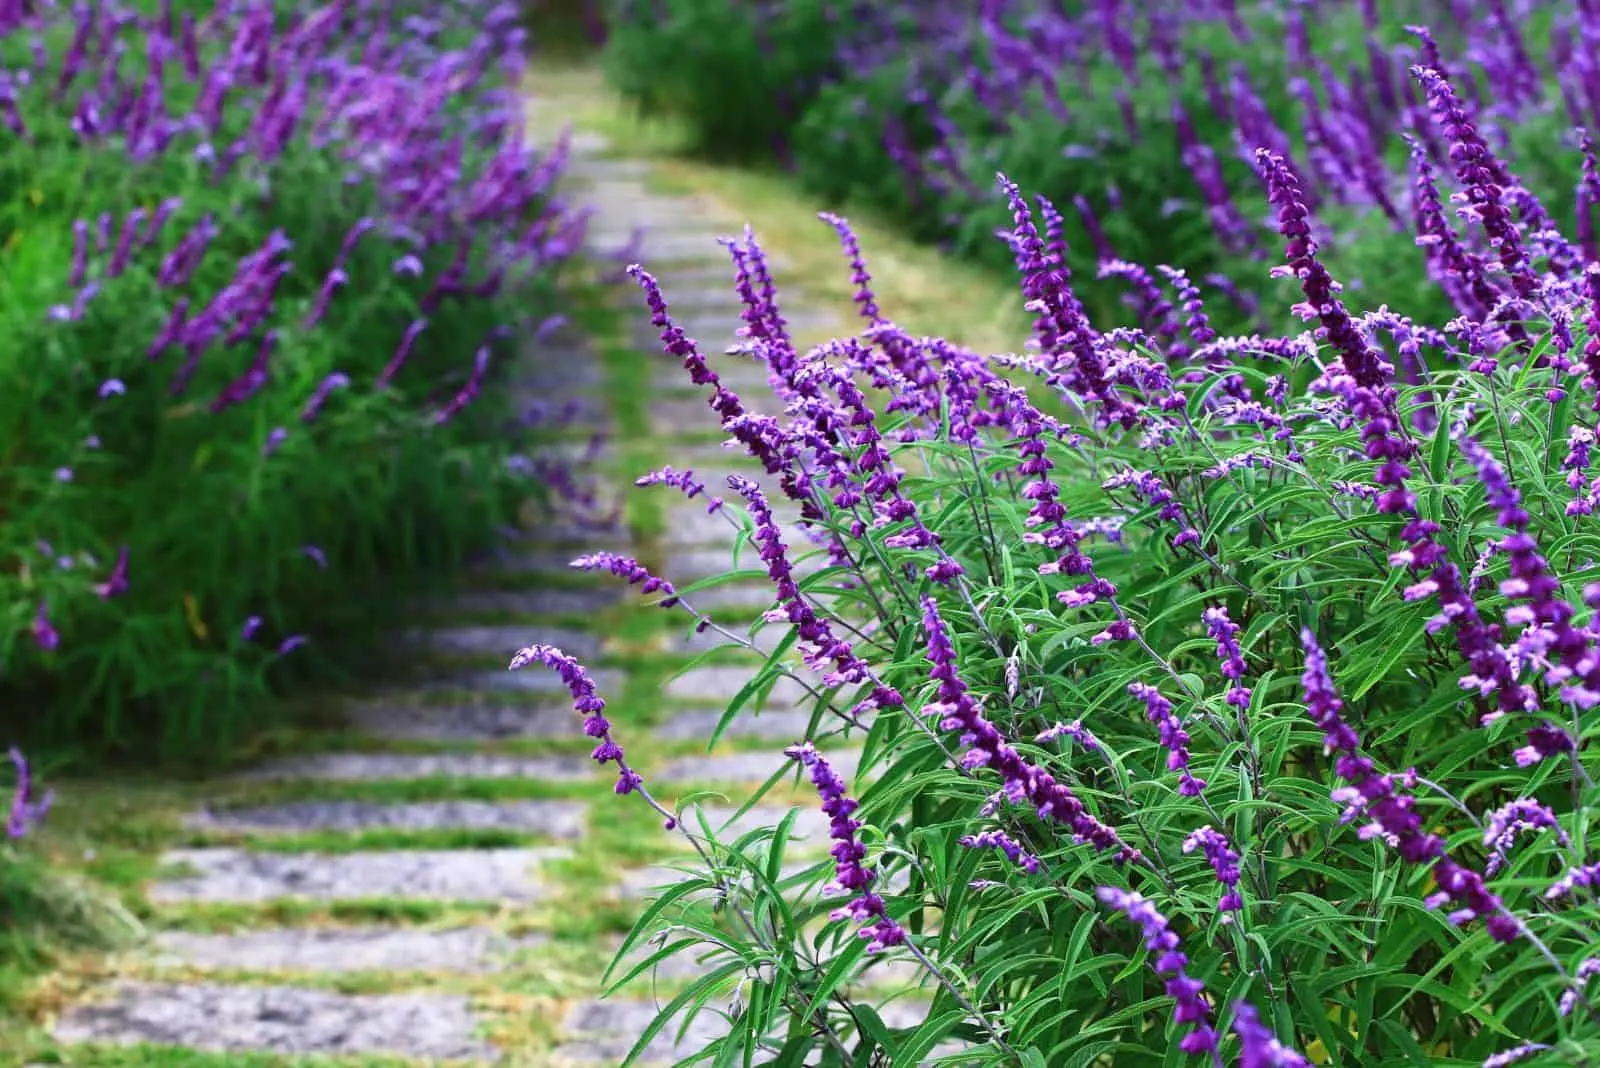 Sage with purple flowers